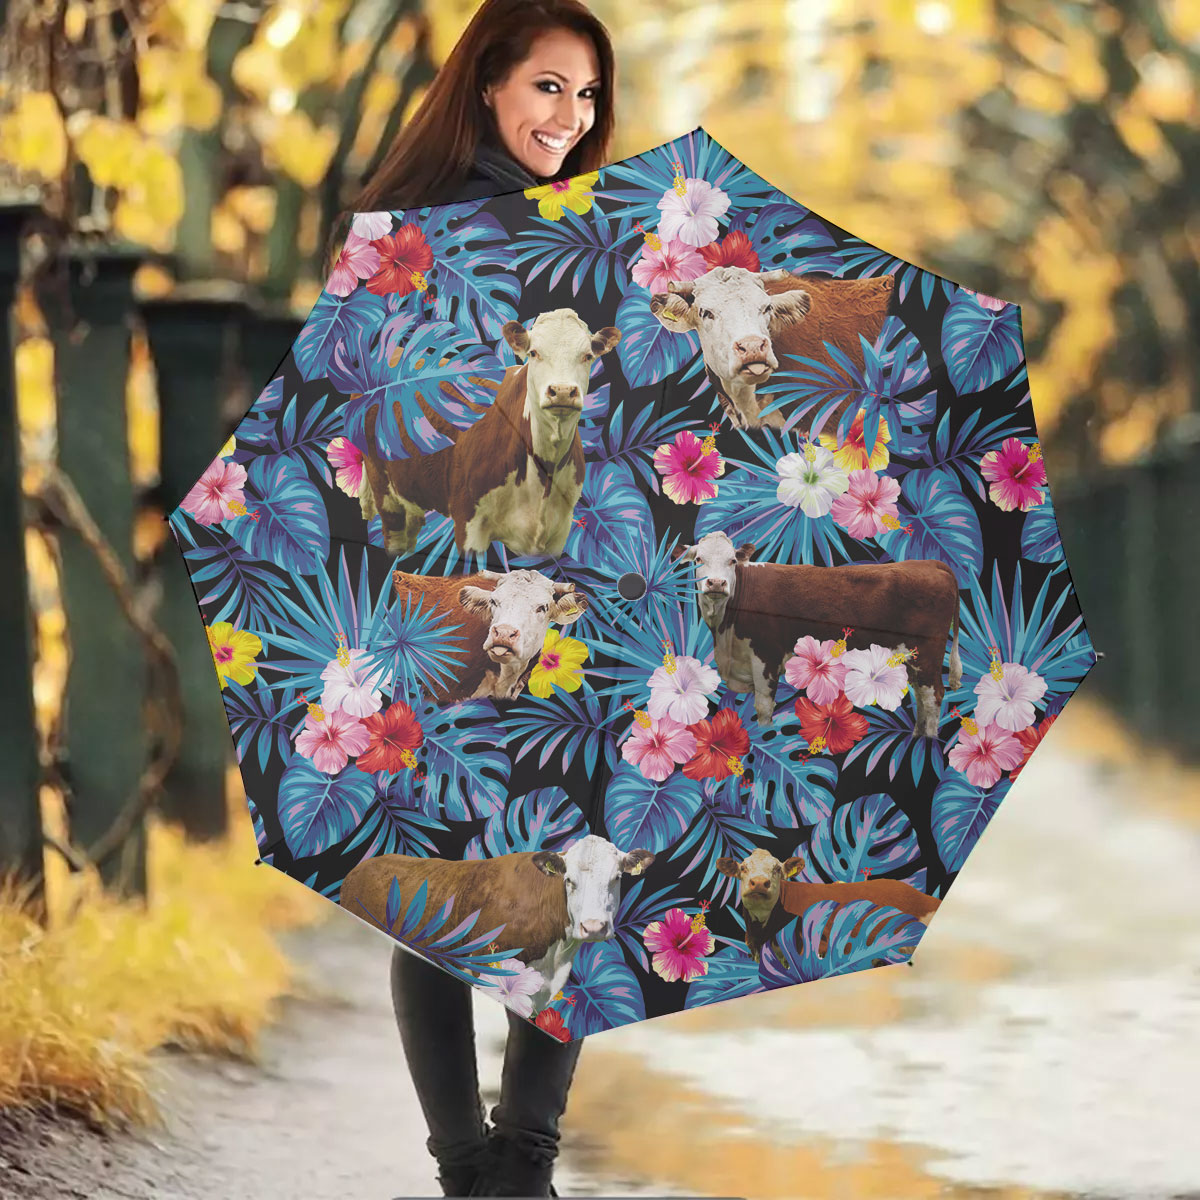 Hereford Tropical Flowers Leaves Pattern Umbrella